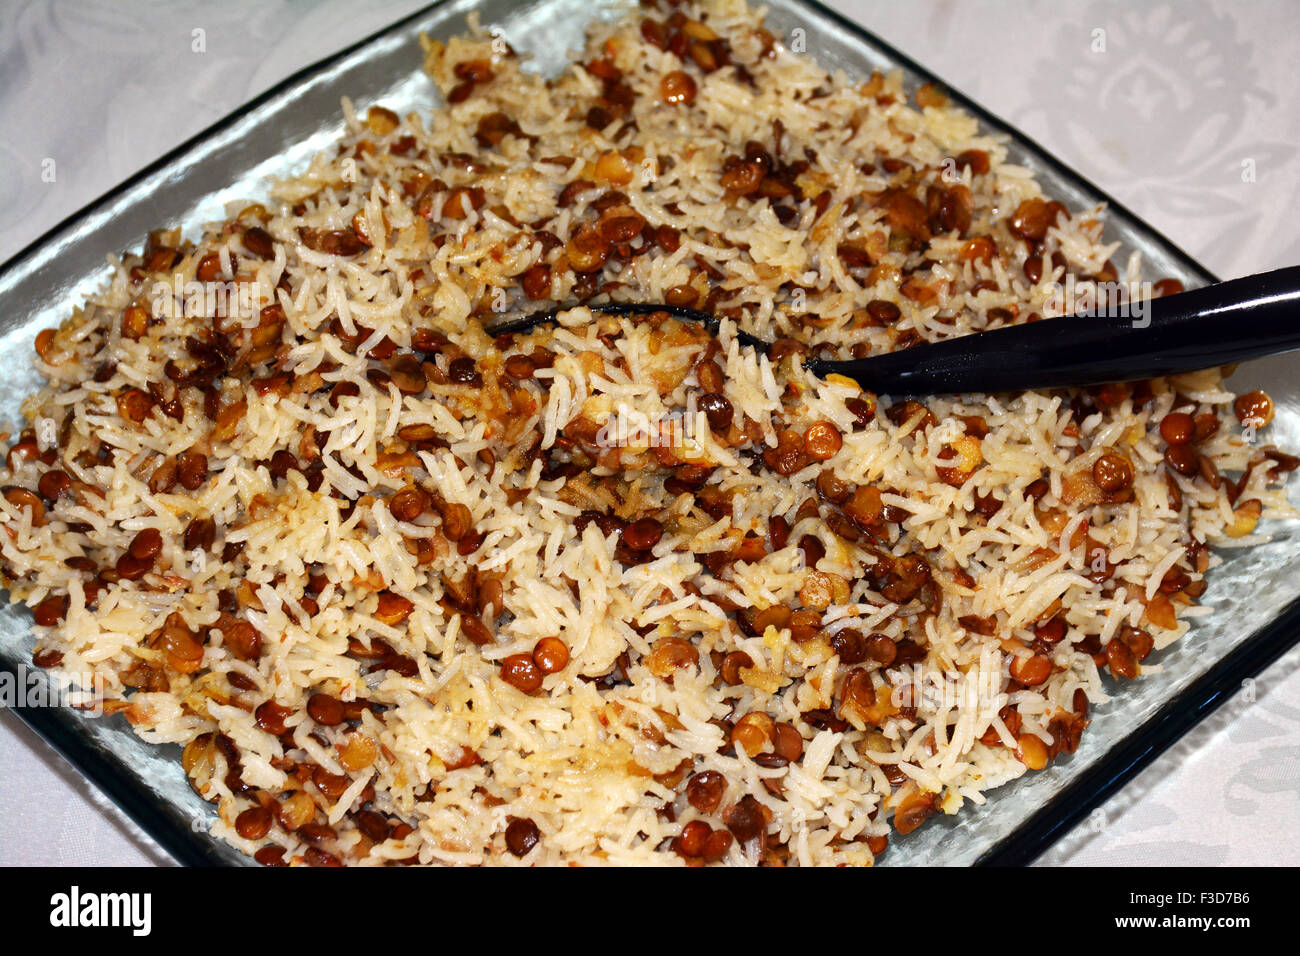 Rice and lentils dish, Mediterranean food Stock Photo